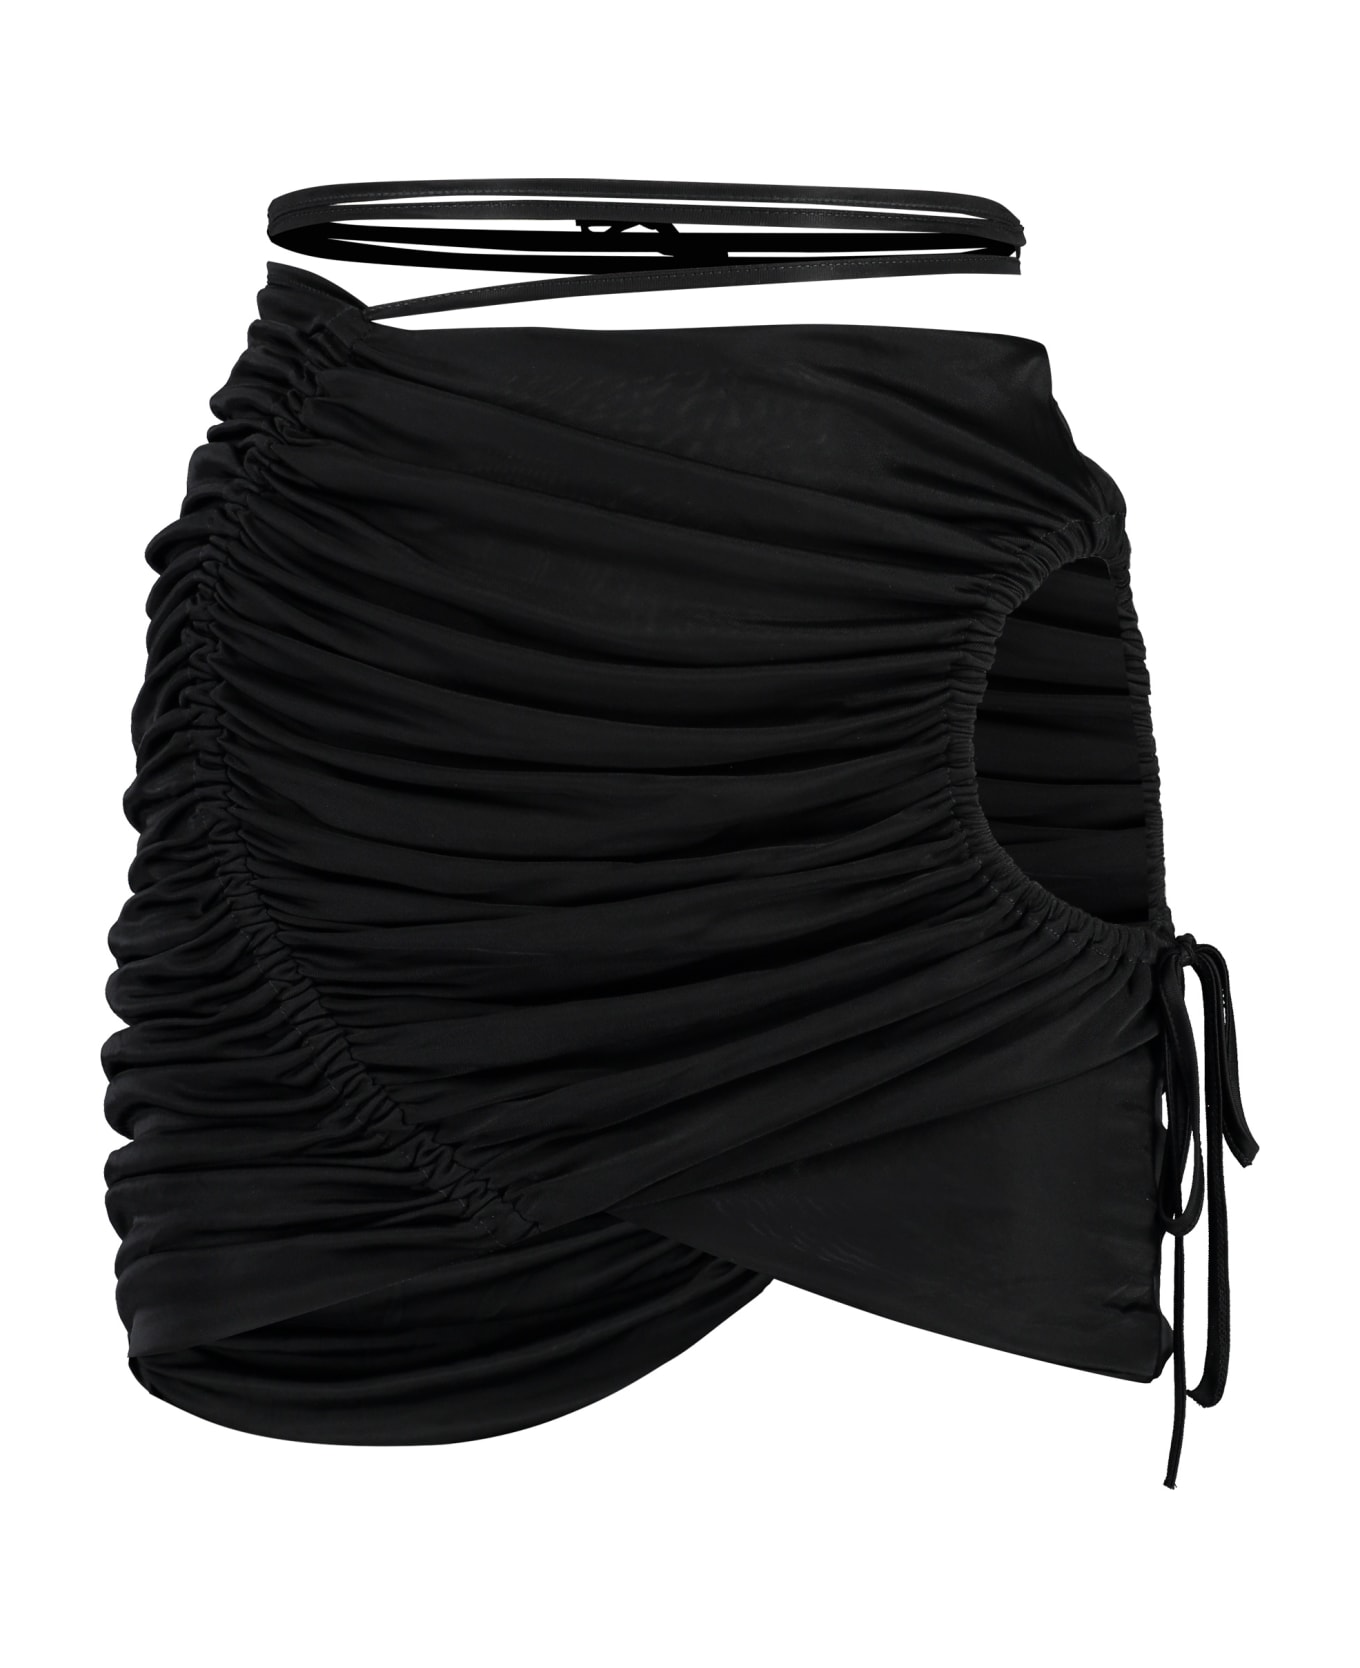 ANDREĀDAMO Draped Skirt - black